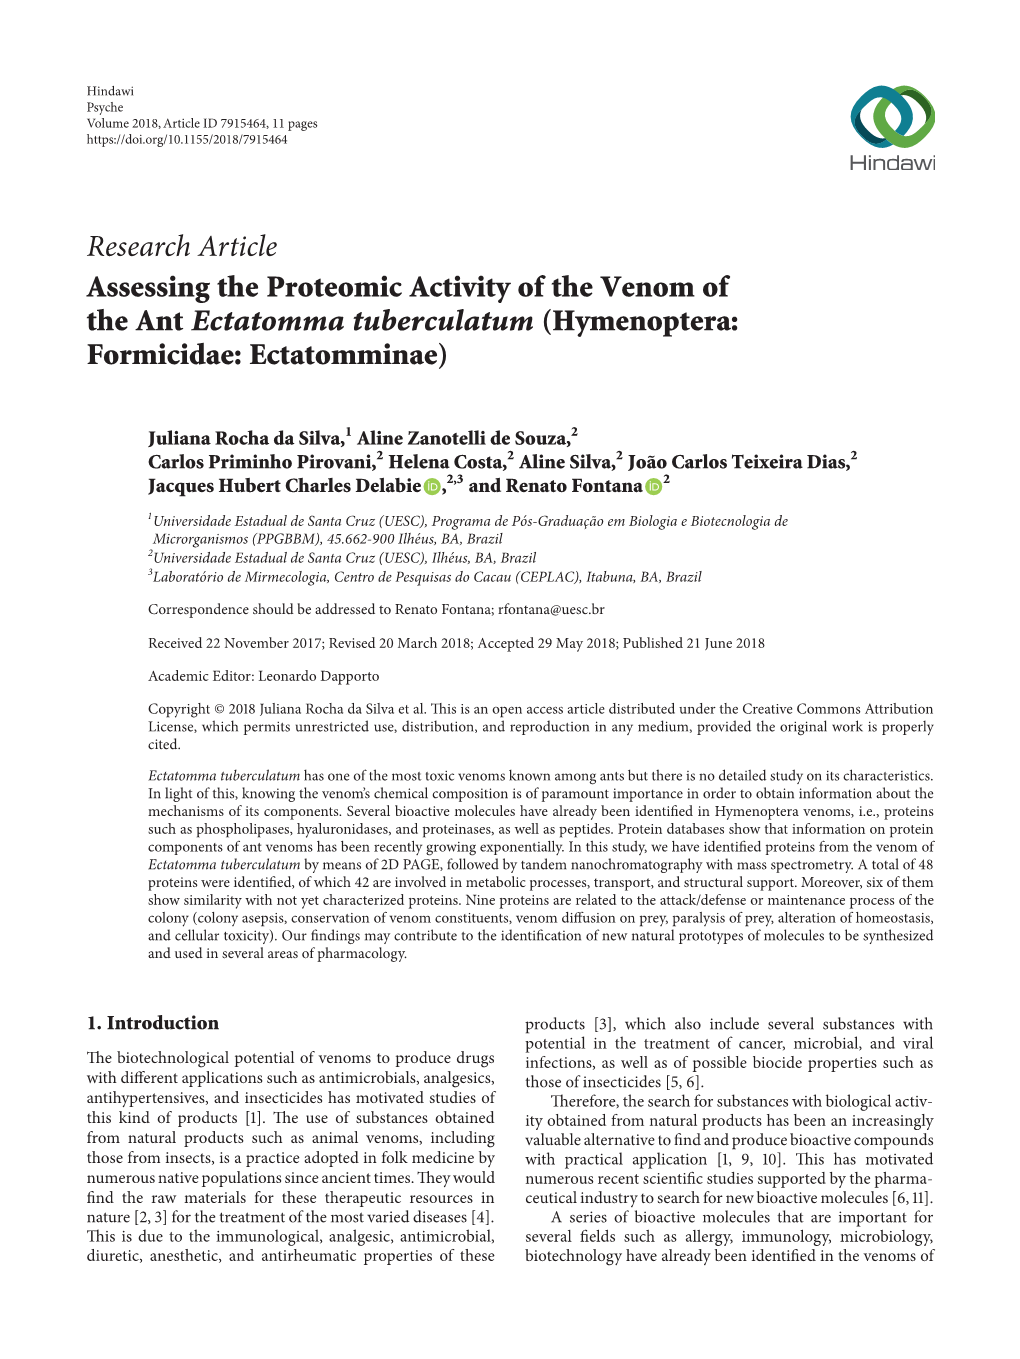 Assessing the Proteomic Activity of the Venom of the Ant Ectatomma Tuberculatum (Hymenoptera: Formicidae: Ectatomminae)